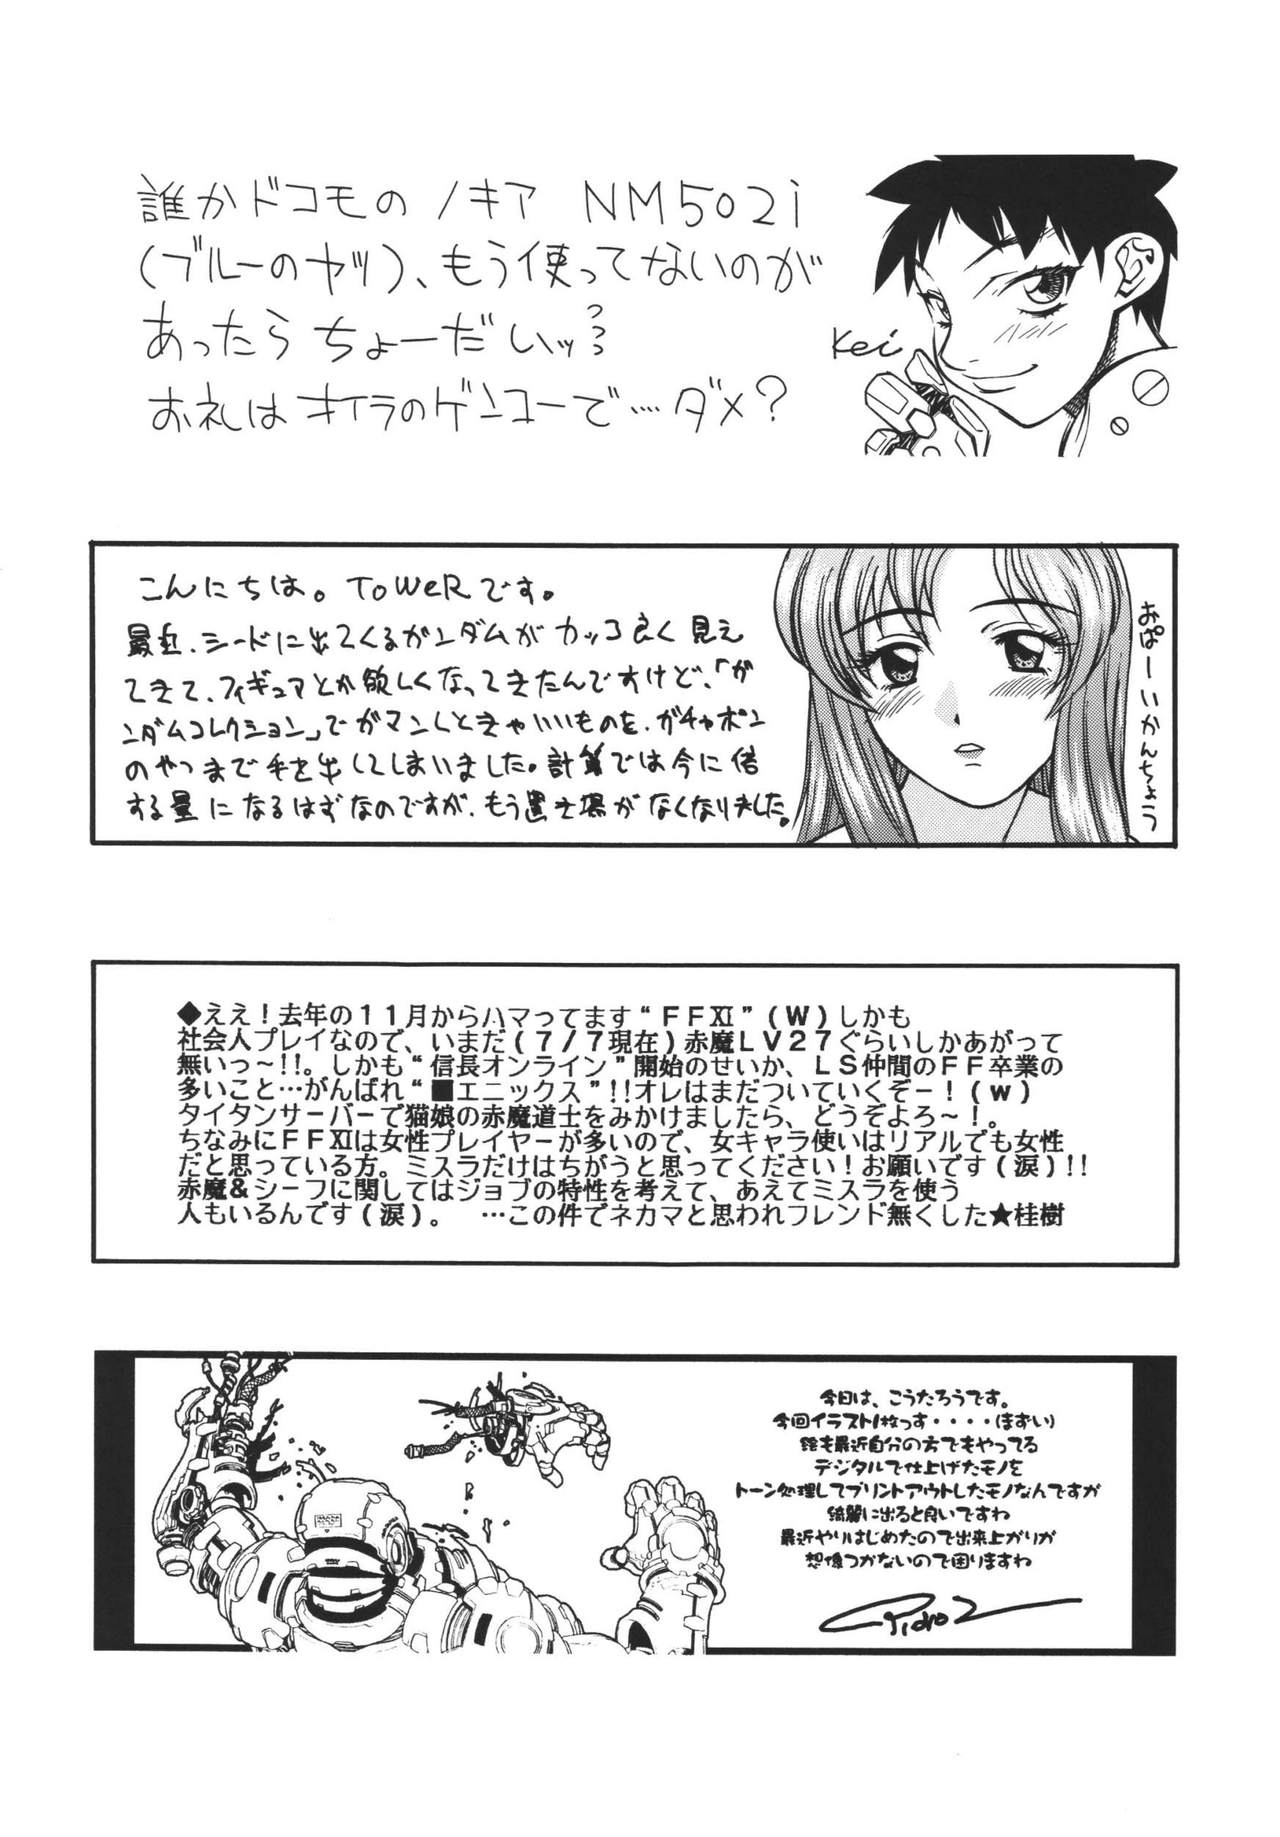 [NEXT (Various)] NEXT Climax Magazine 14 Gundam Seed Tokushuu-gou (Gundam SEED) [Digital] [NEXT (よろず)] NEXT Climax Magazine 14　ガ○ダムシード特集号 (機動戦士ガンダムSEED) [DL版]